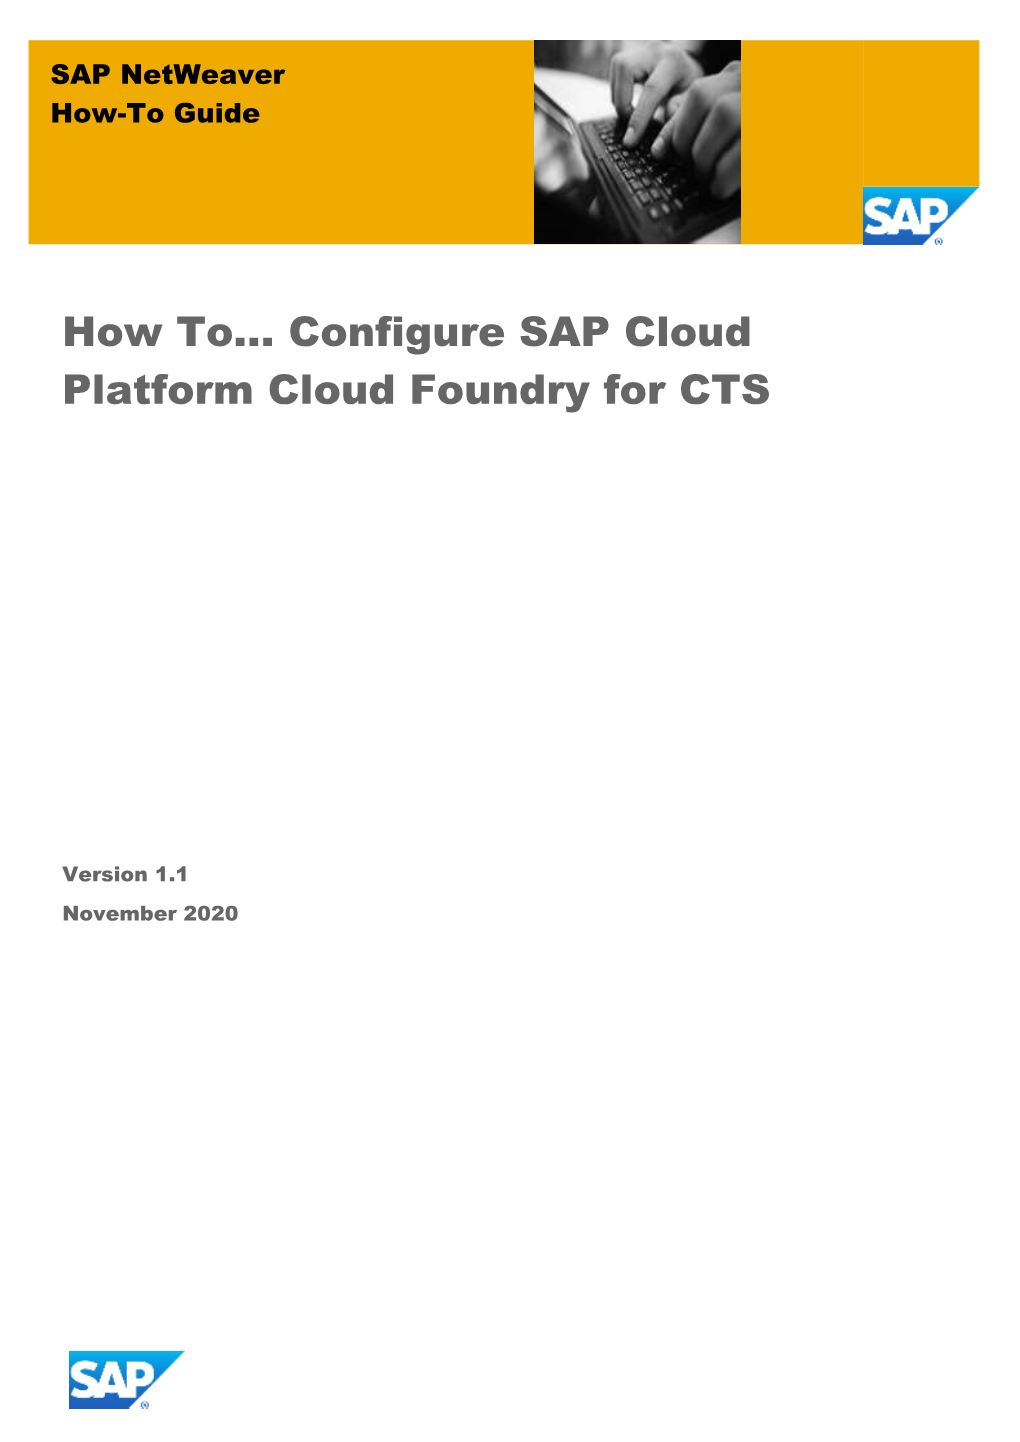 How To... Configure SAP Cloud Platform Cloud Foundry for CTS